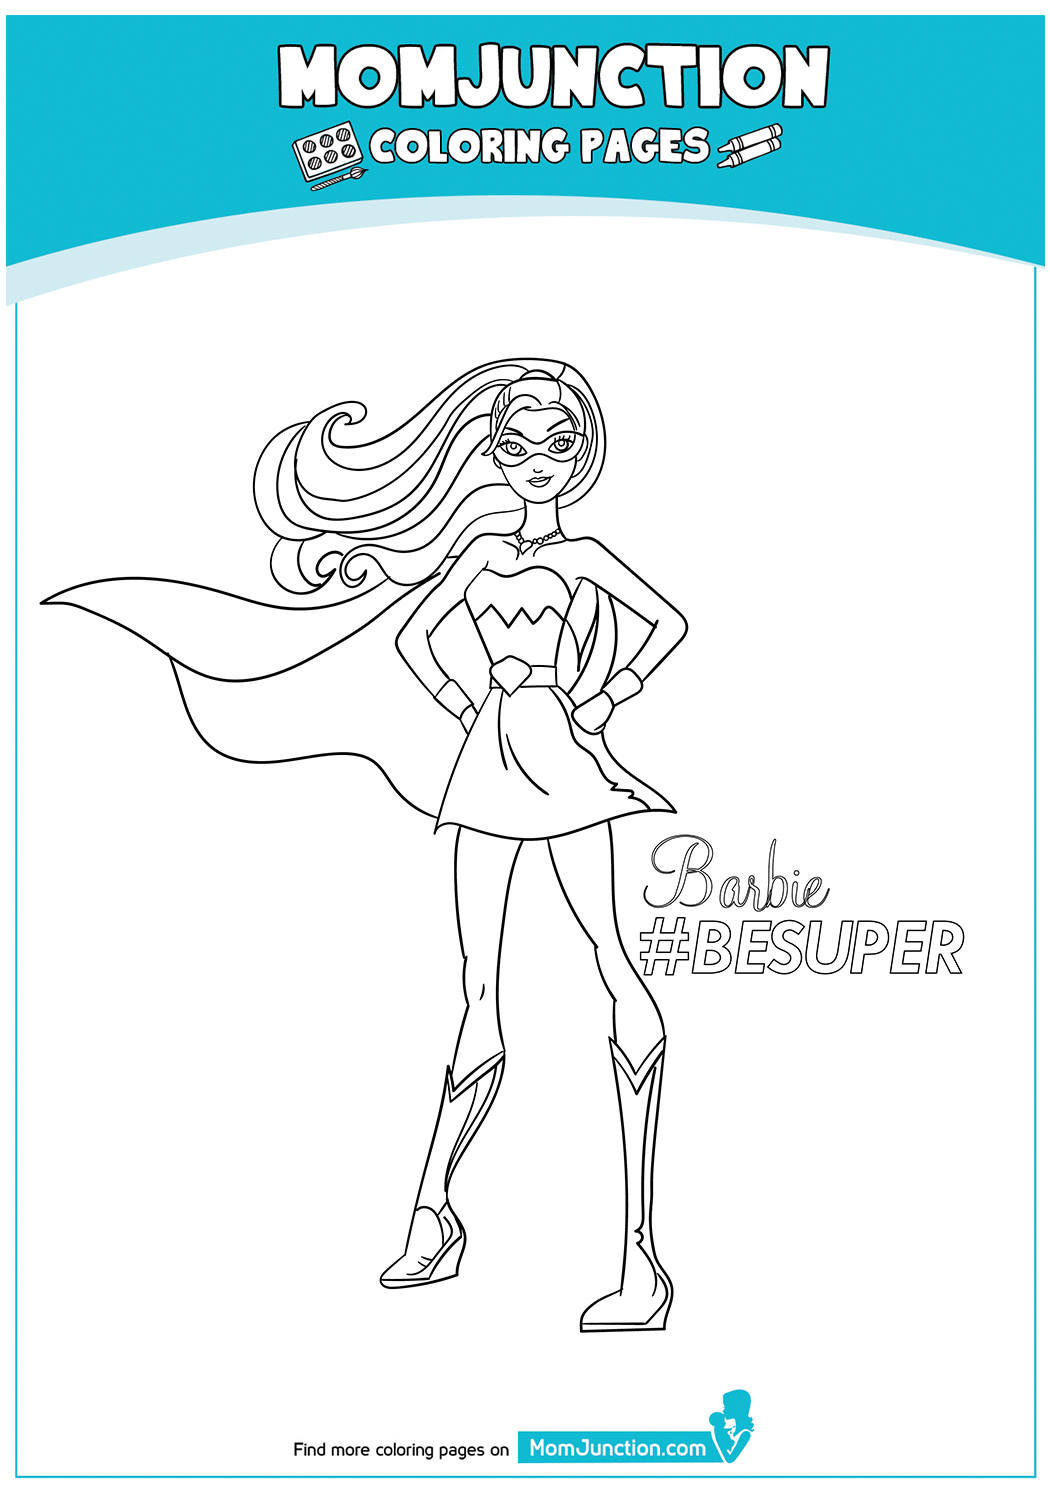 Barbie-Superhero-17